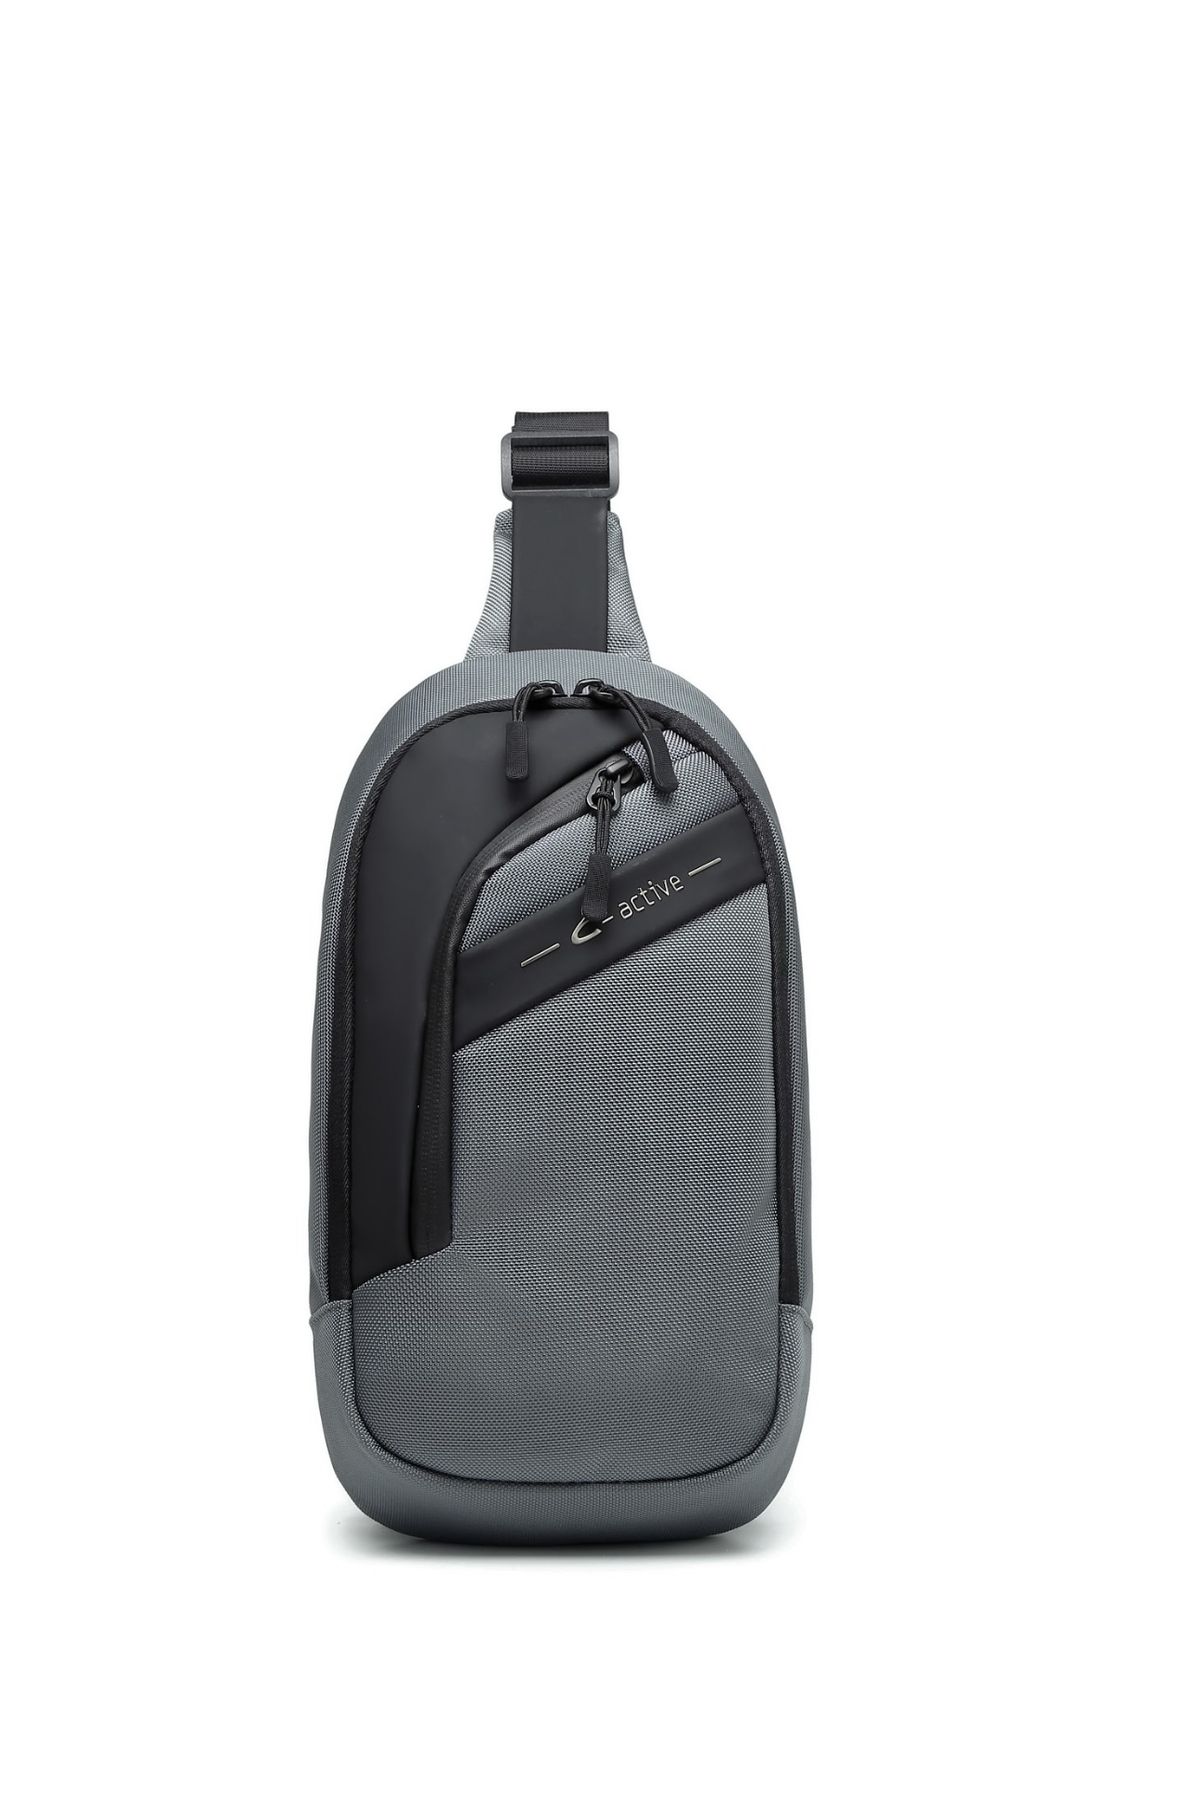 21K Smart Bags Smart bag unisex ithal su geçirmez kumaş body bag 8677